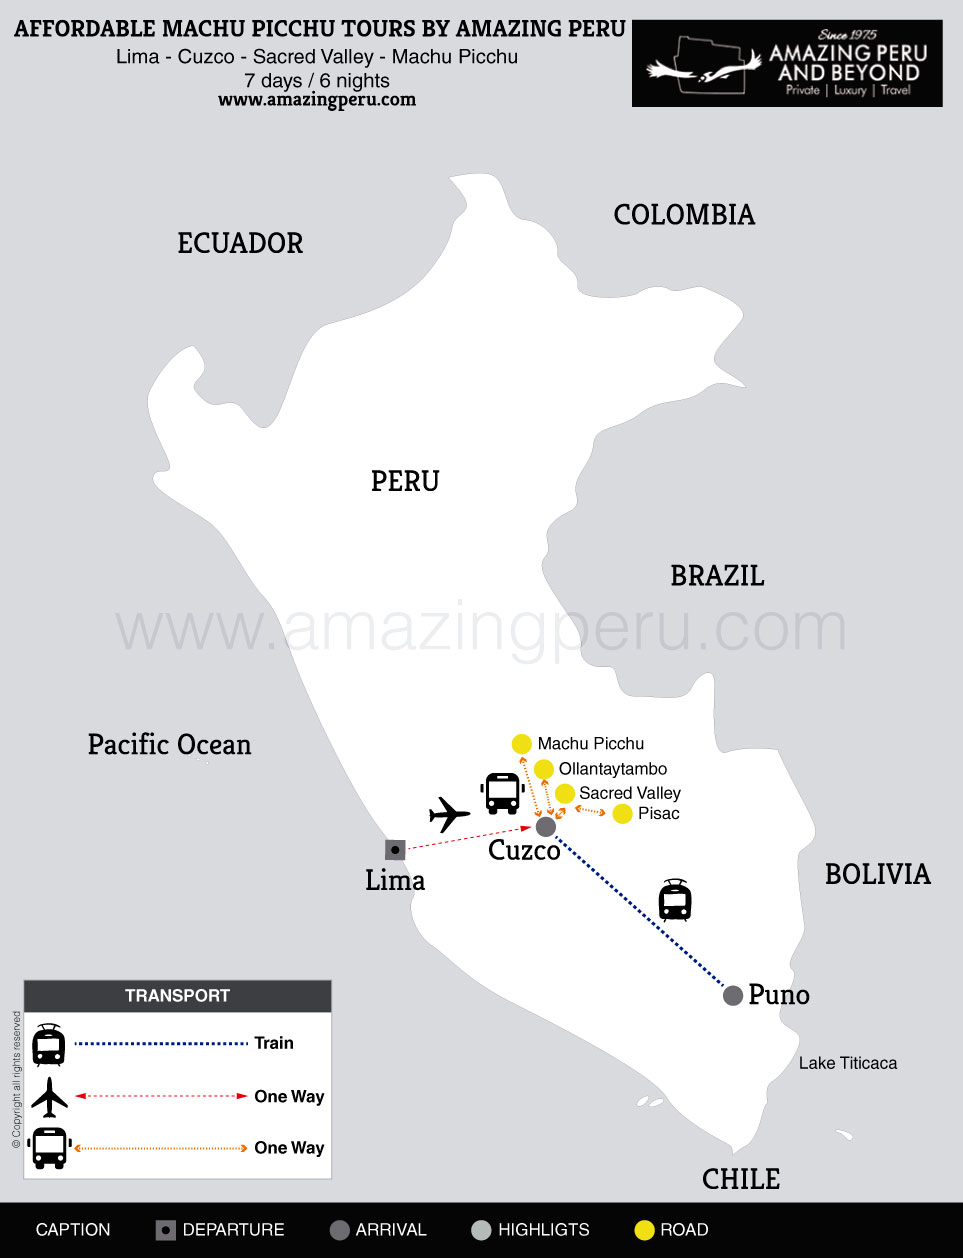 2024 Affordable Machu Picchu Tours by Amazing Peru - 7 days / 6 nights.